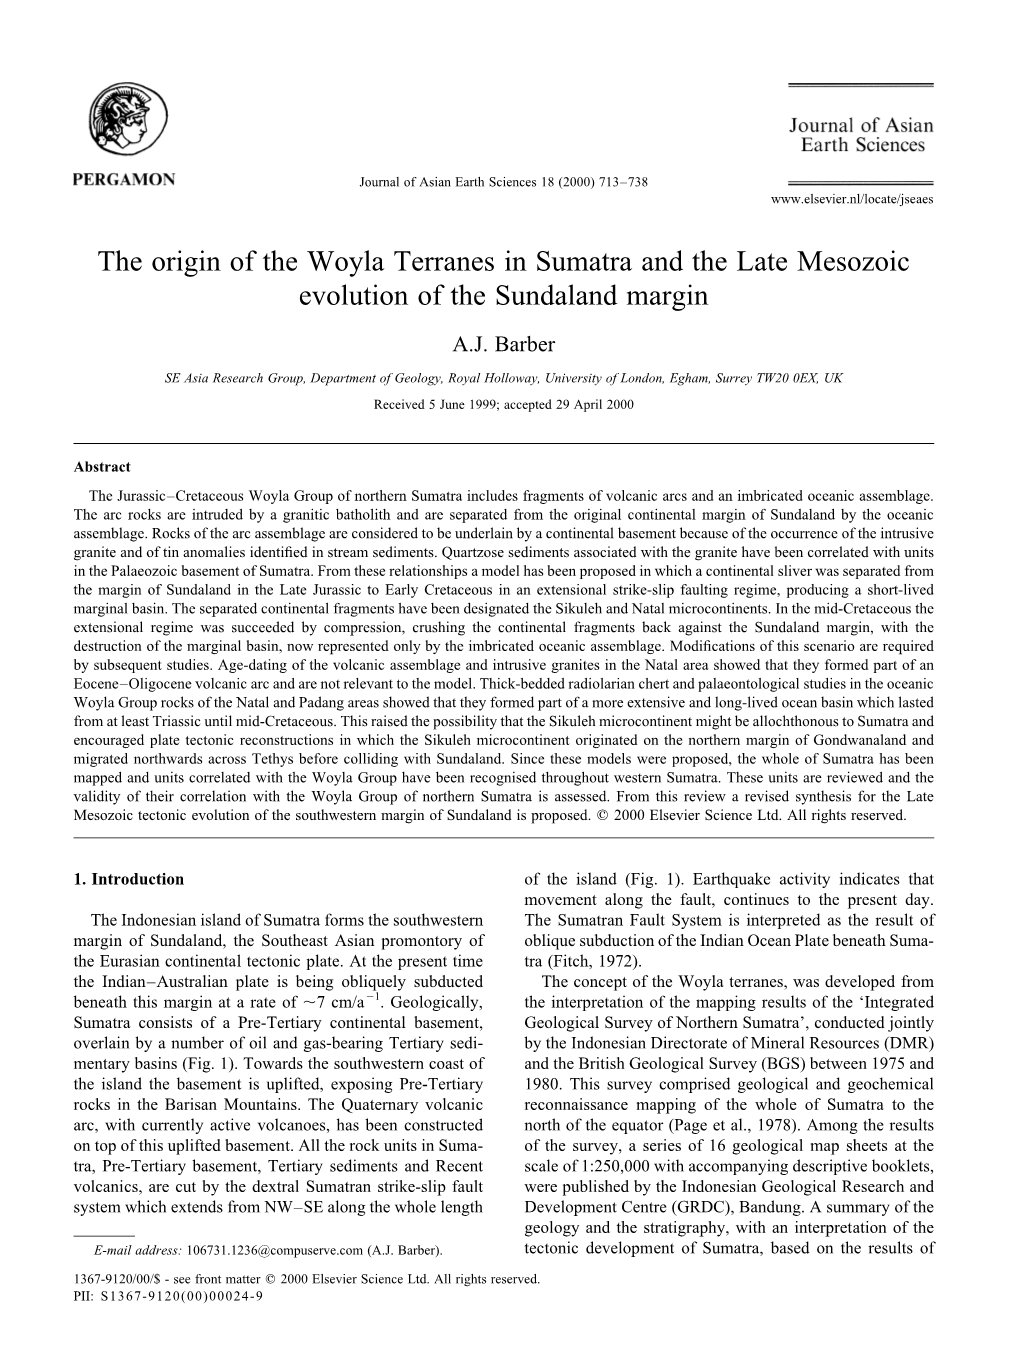 The Origin of the Woyla Terranes in Sumatra and the Late Mesozoic Evolution of the Sundaland Margin